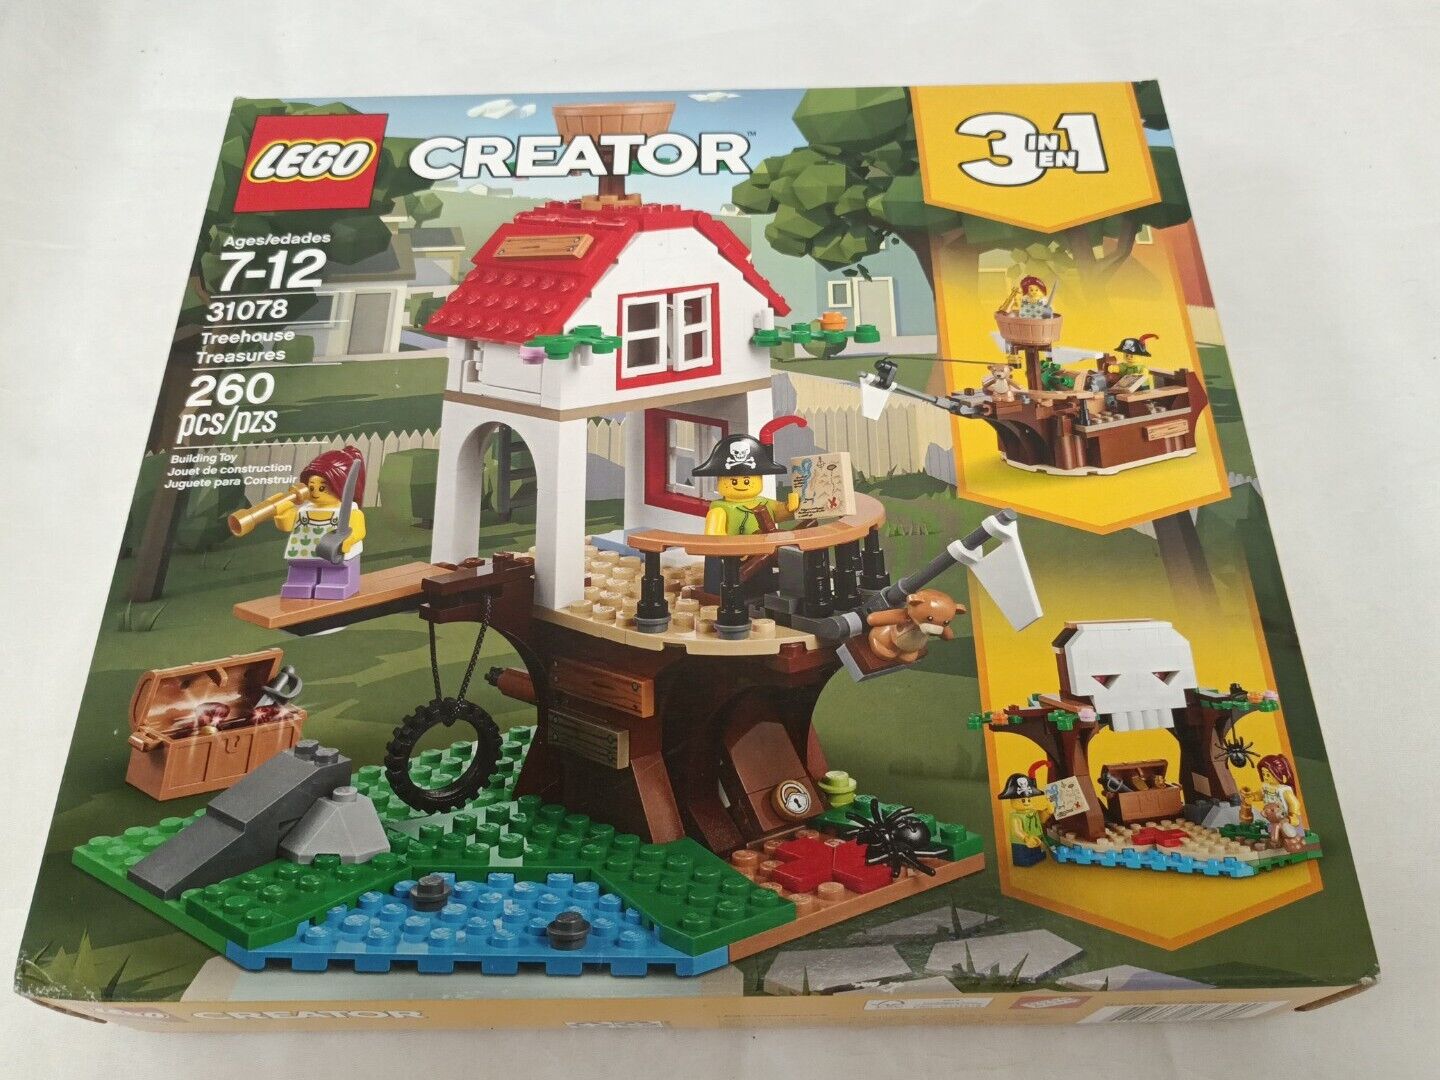 excitation vedvarende ressource Held og lykke LEGO Creator 3 in 1 Treehouse Treasures 31078 New in a sealed box SHIPS  FREE! 5702016111774 | eBay